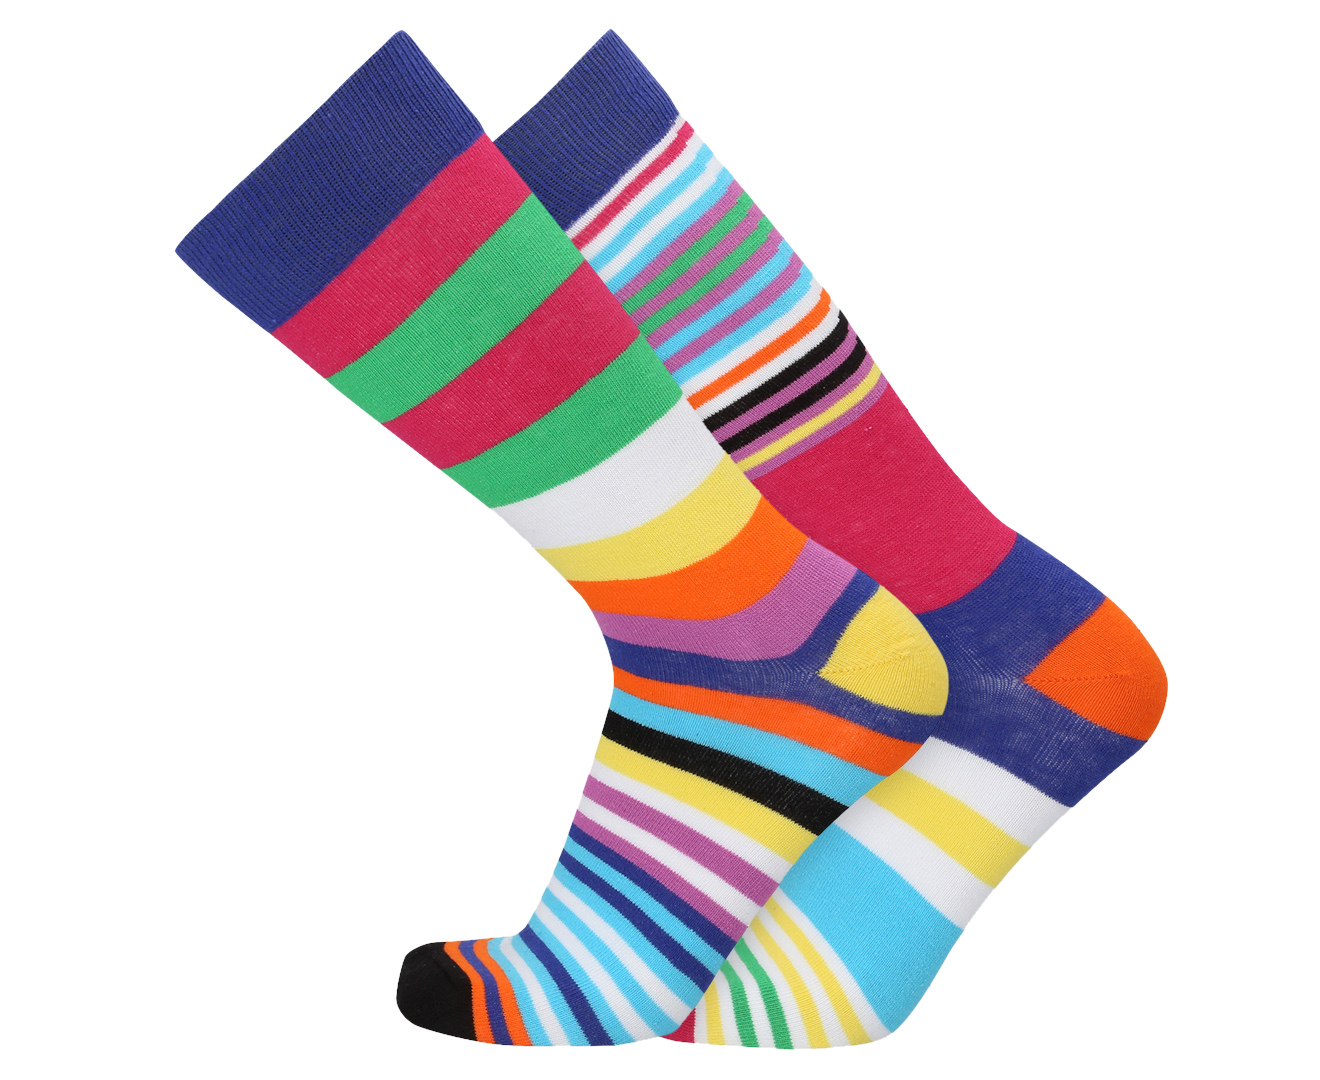 Odd Socks Men's The Sock Exchange Weekend Crew Socks 6-Pack - Multi ...